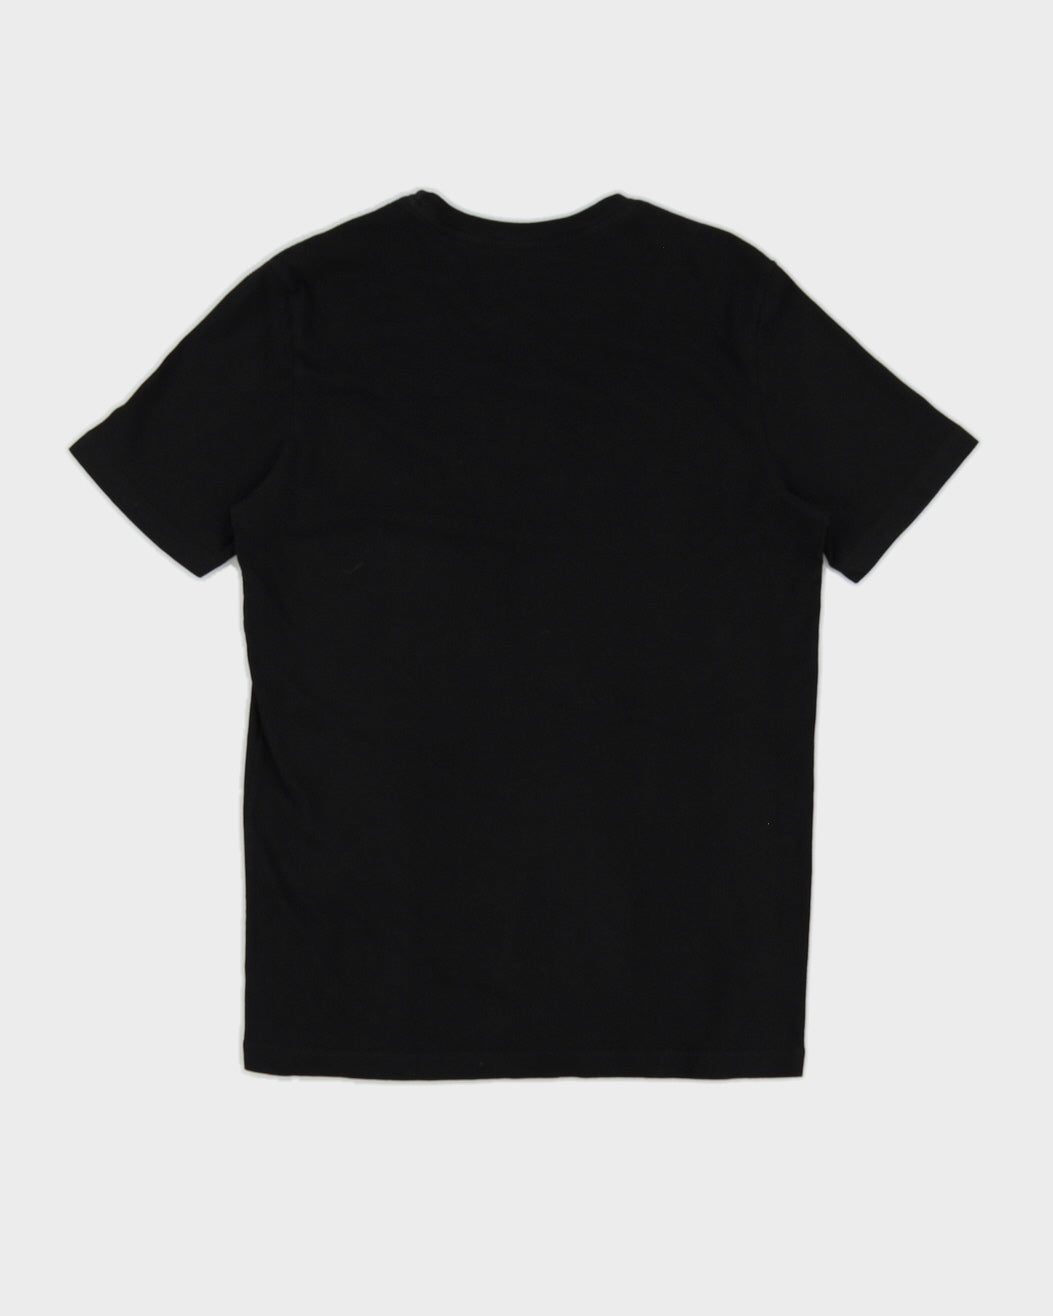 Black Michael Kors T-Shirt - S